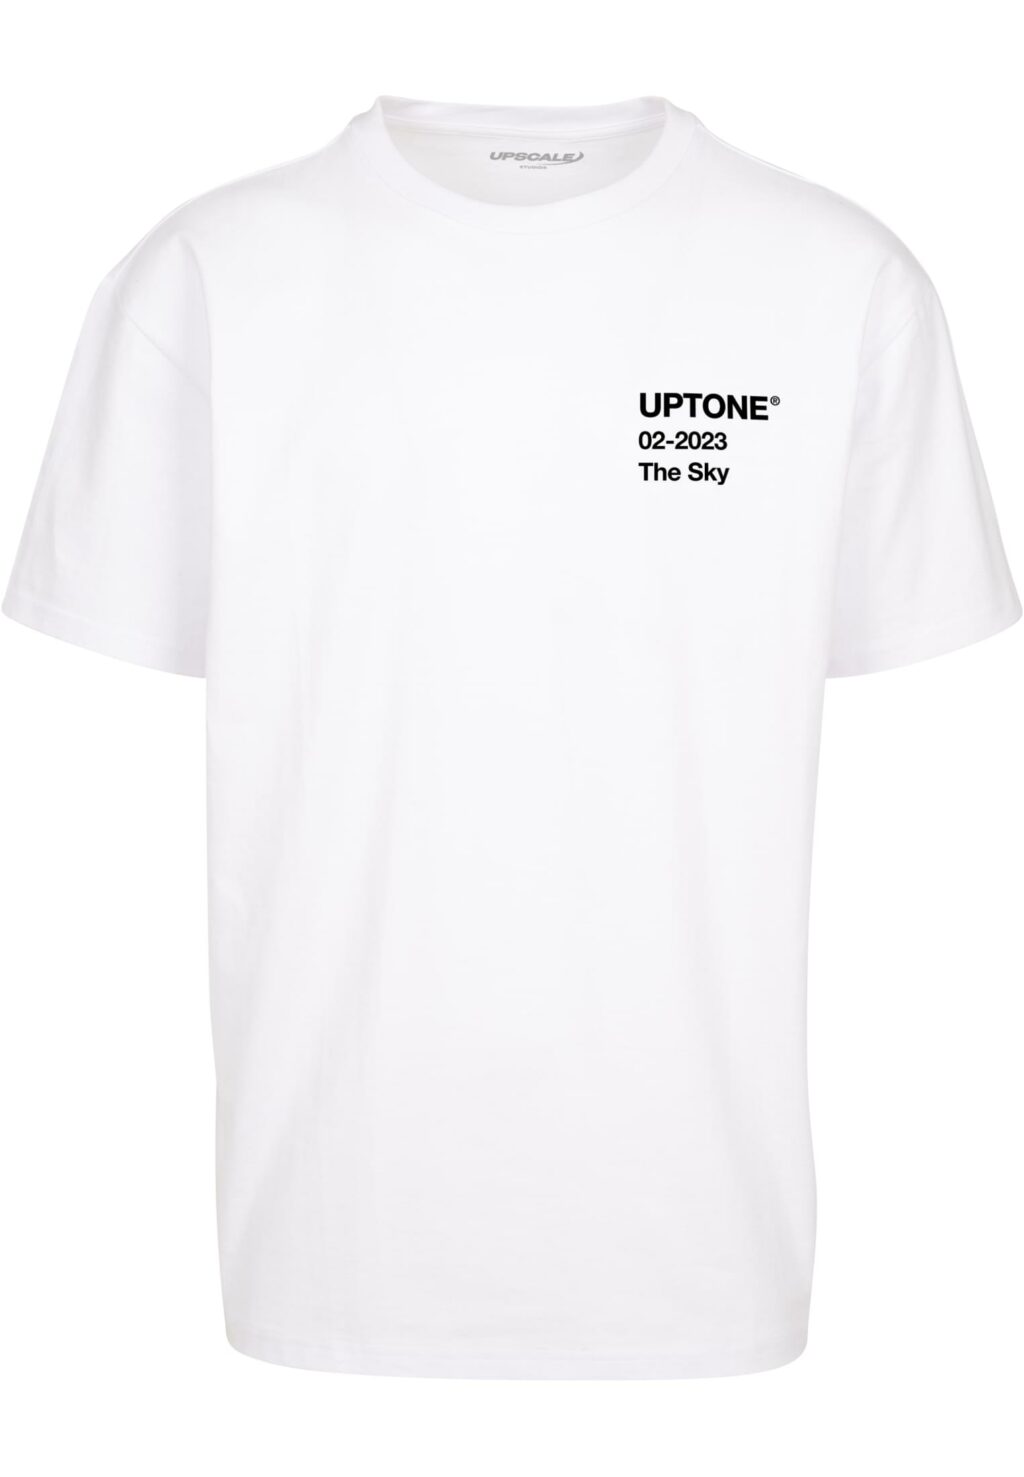 Uptone Oversize Tee white MT2745